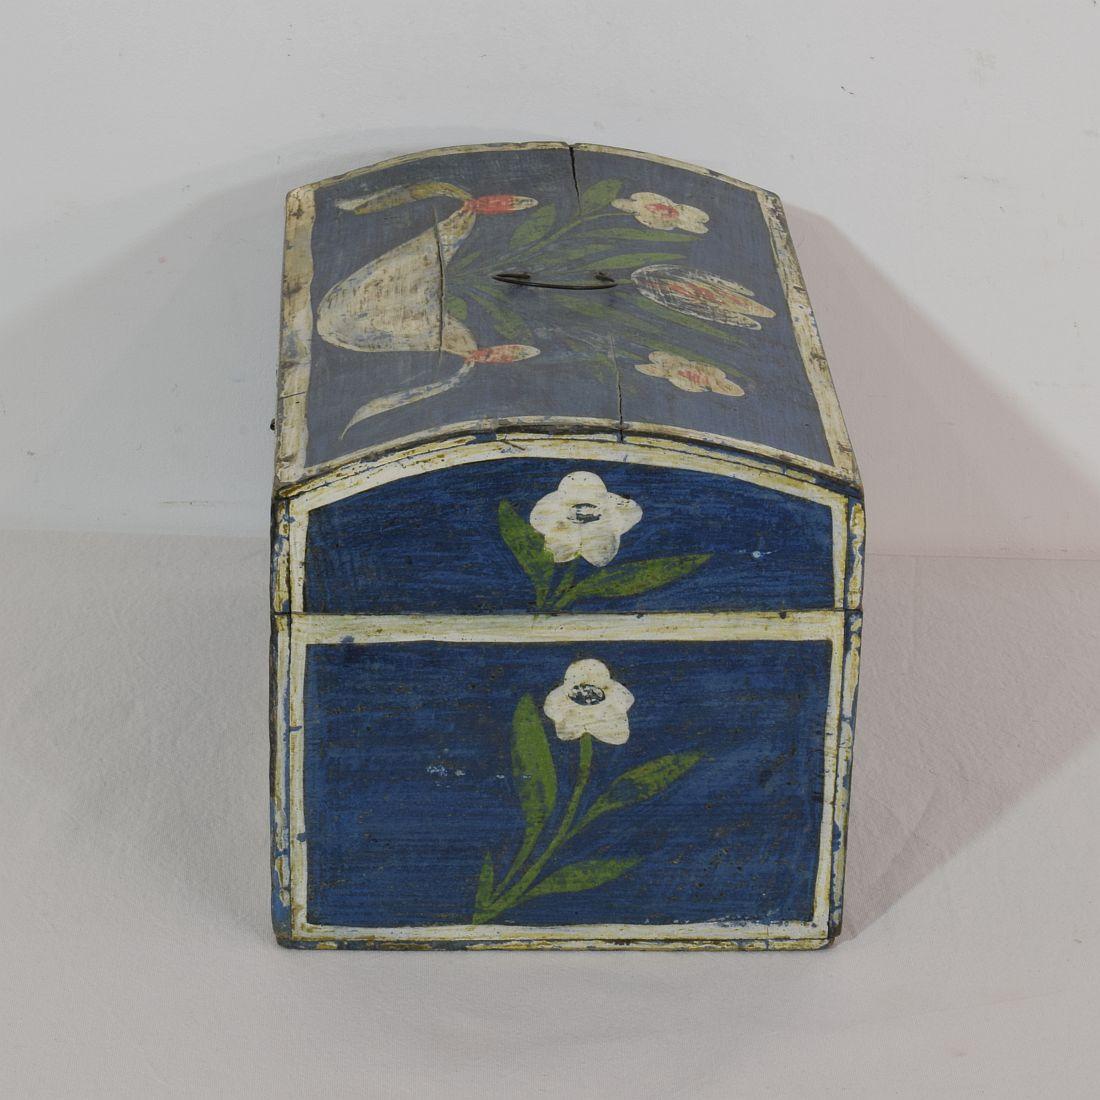 19th Century French Folk Art Wedding Box from Normandy 1